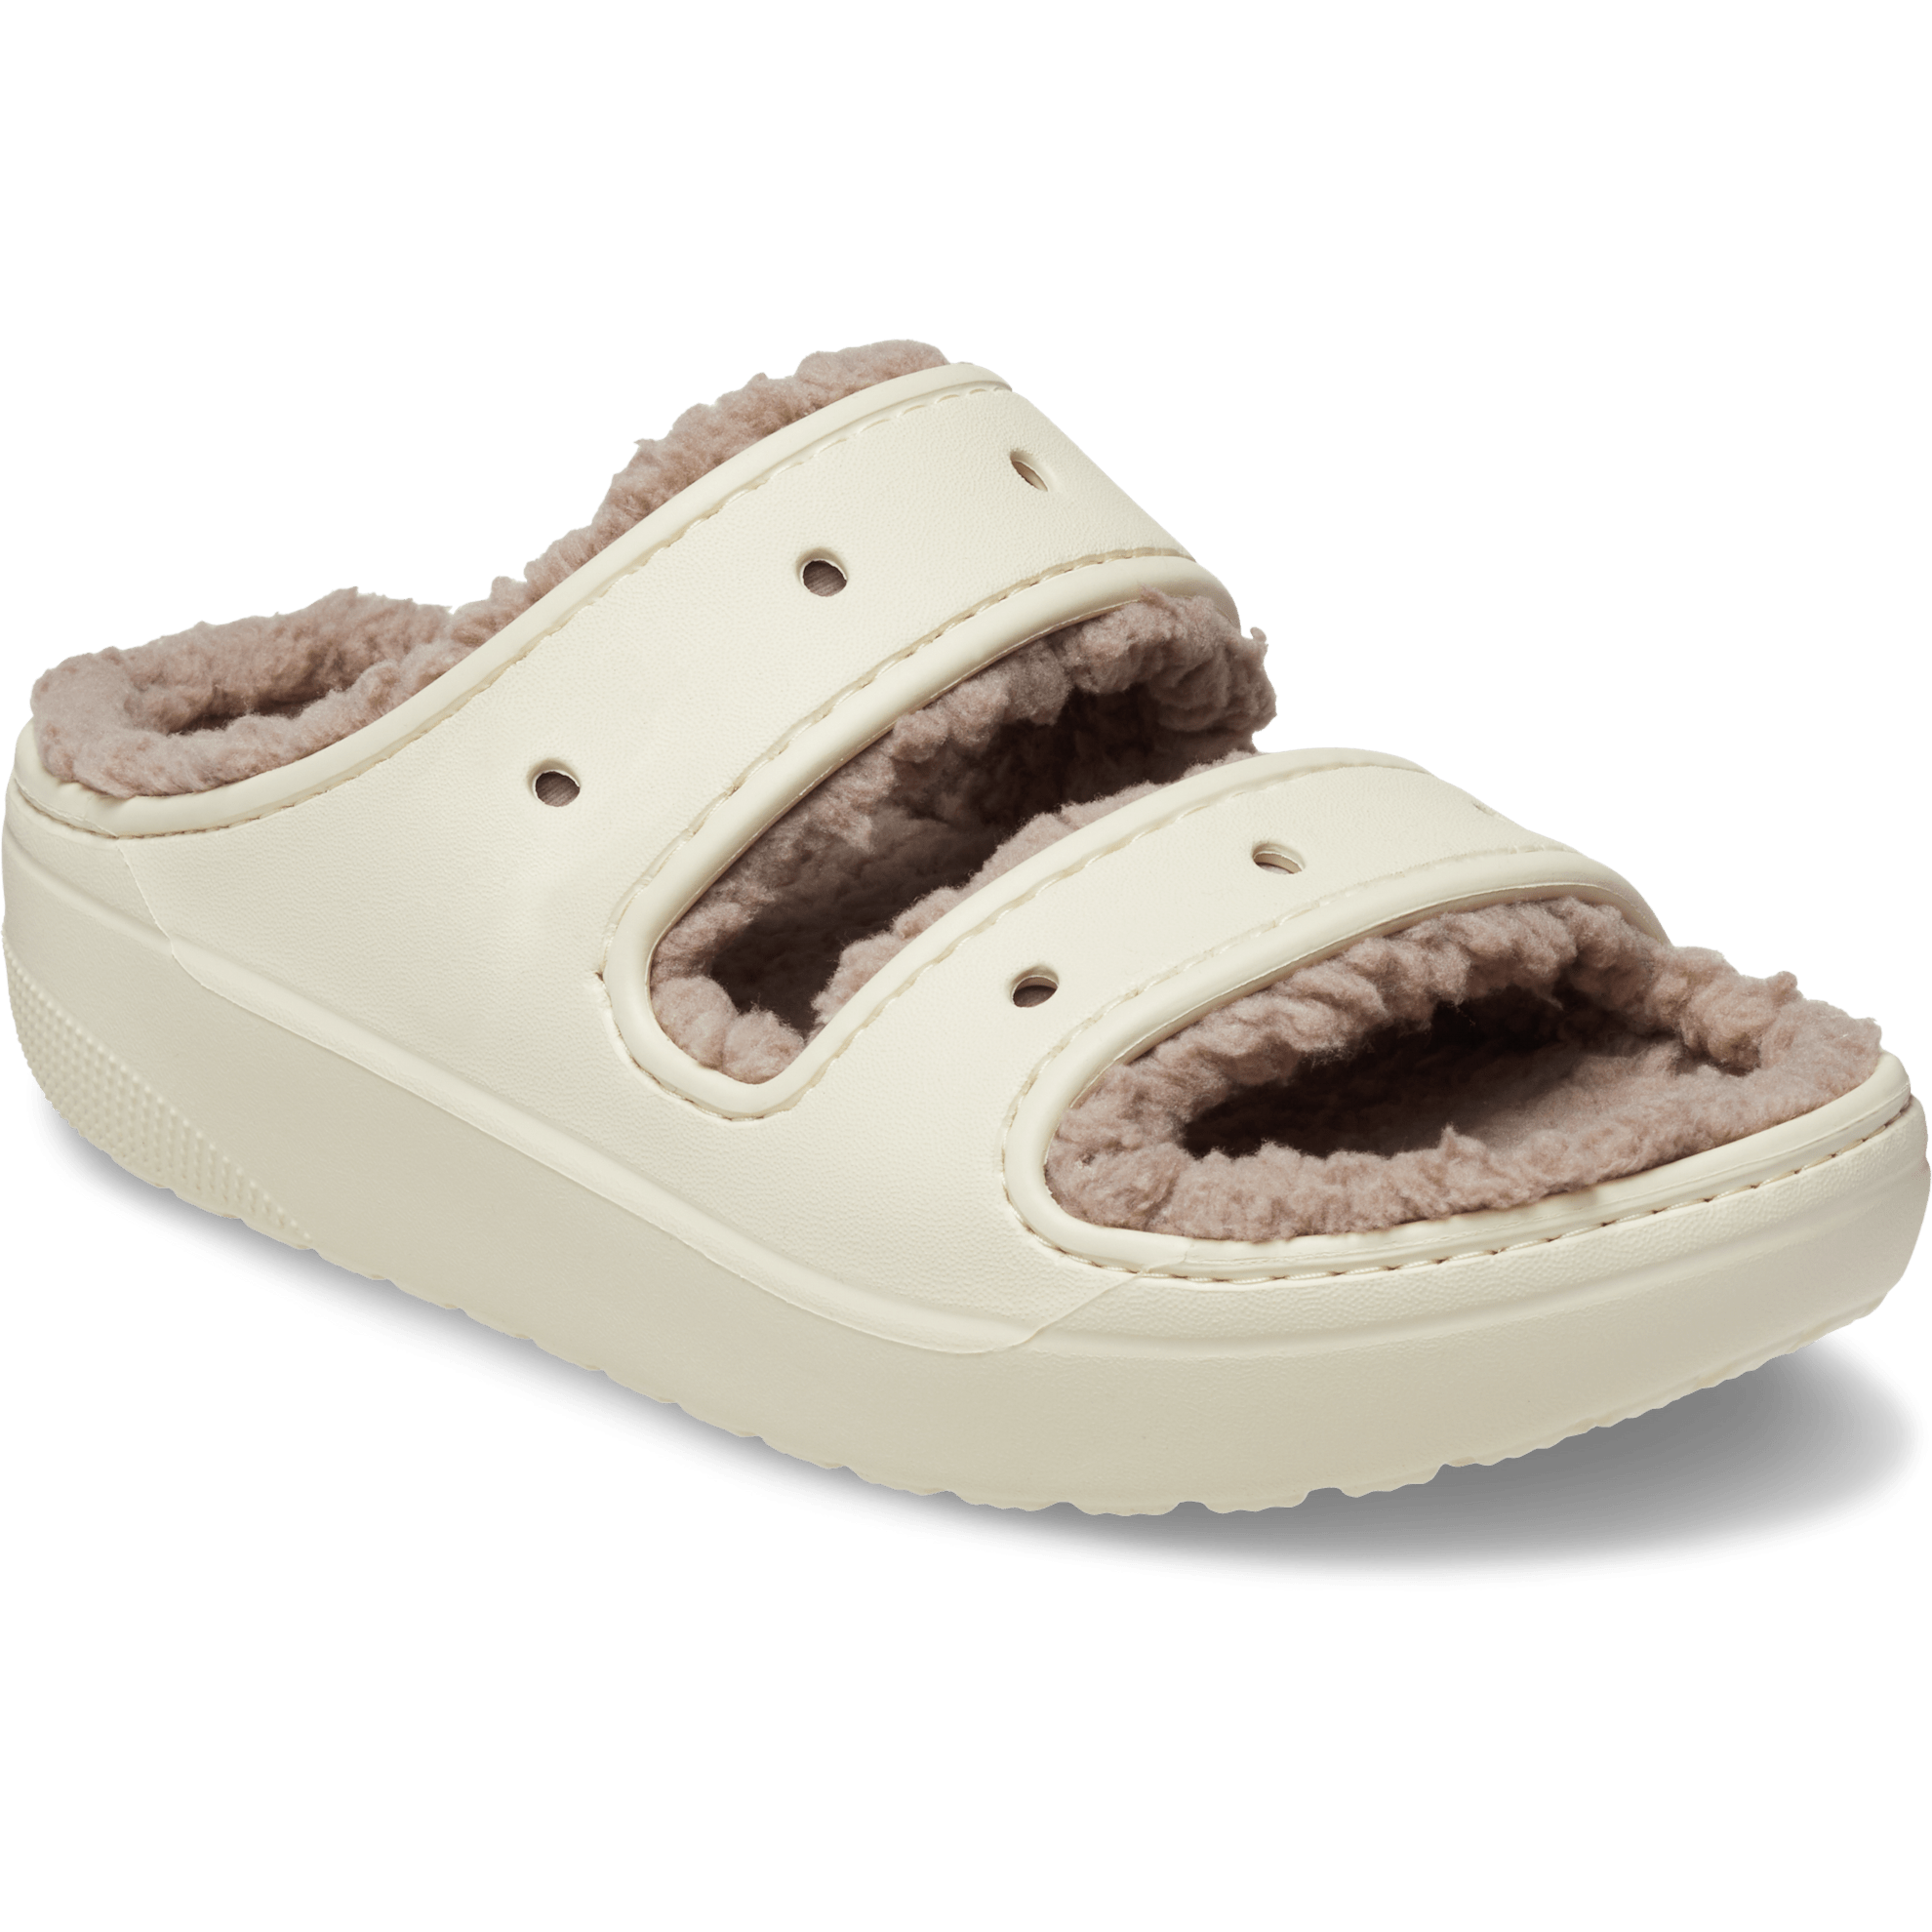 Crocs Classic Cozzzy Sandal Mushroom